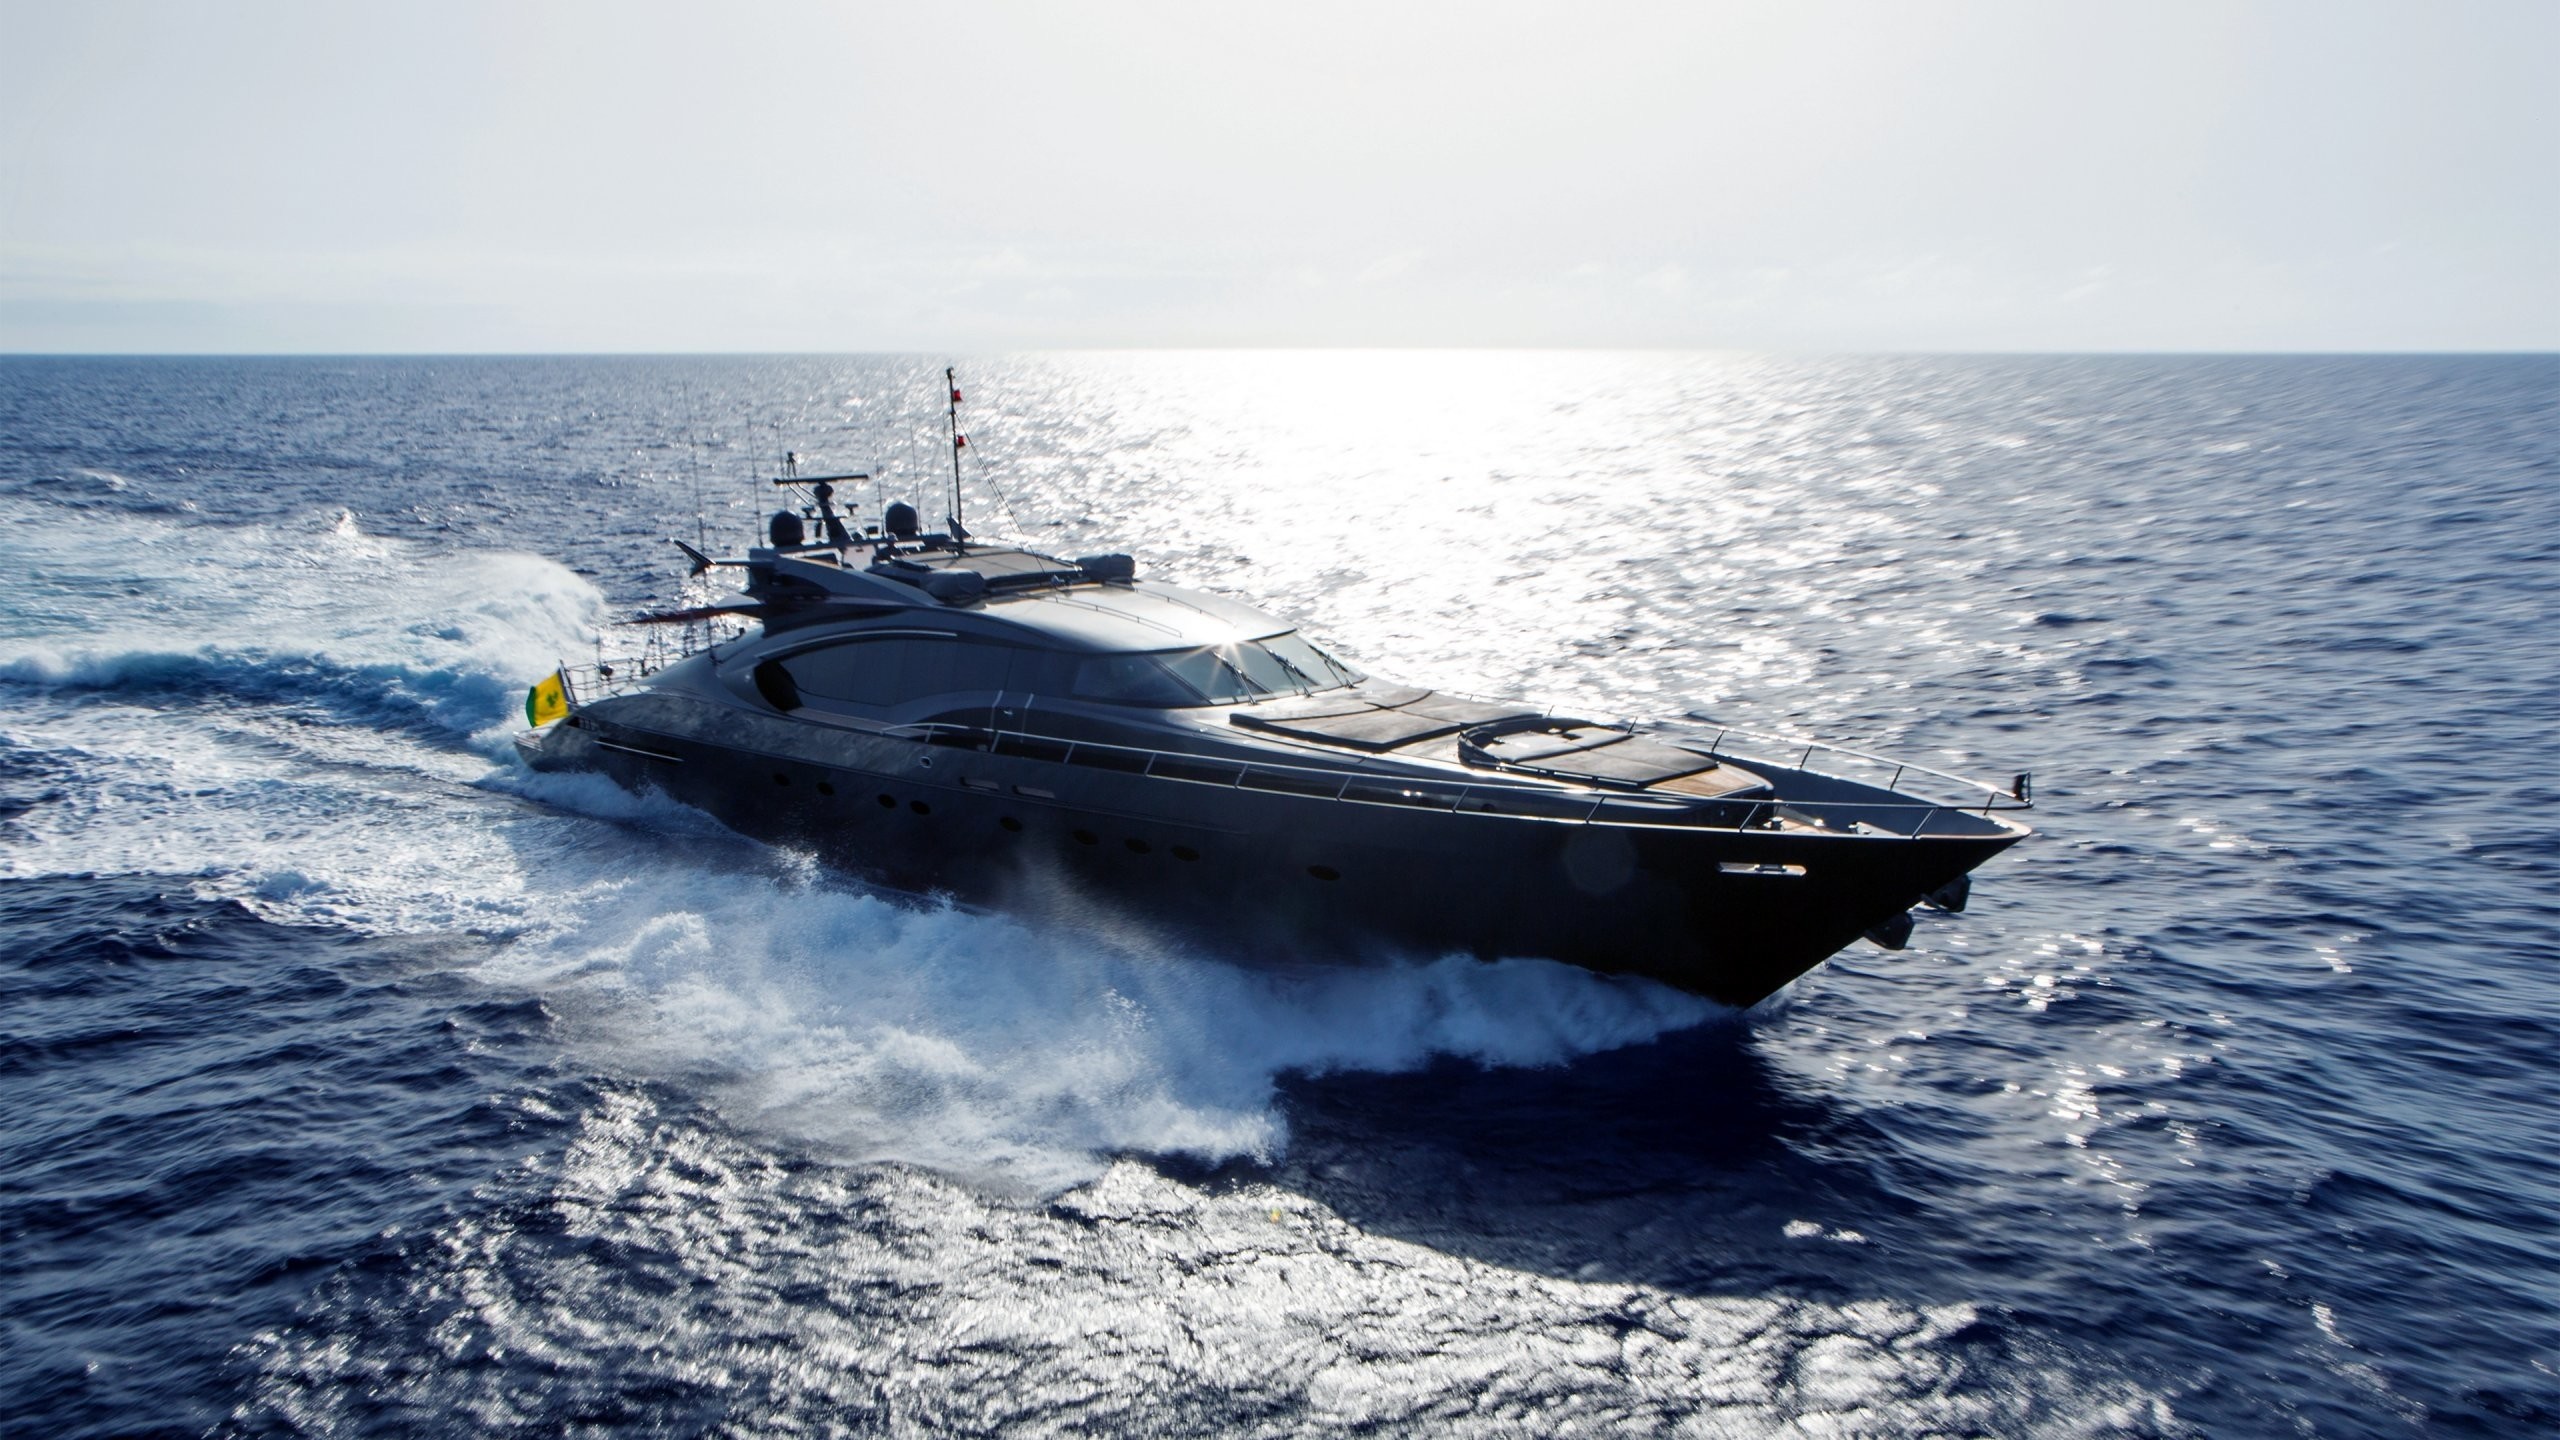 The 36m Yacht ASCARI